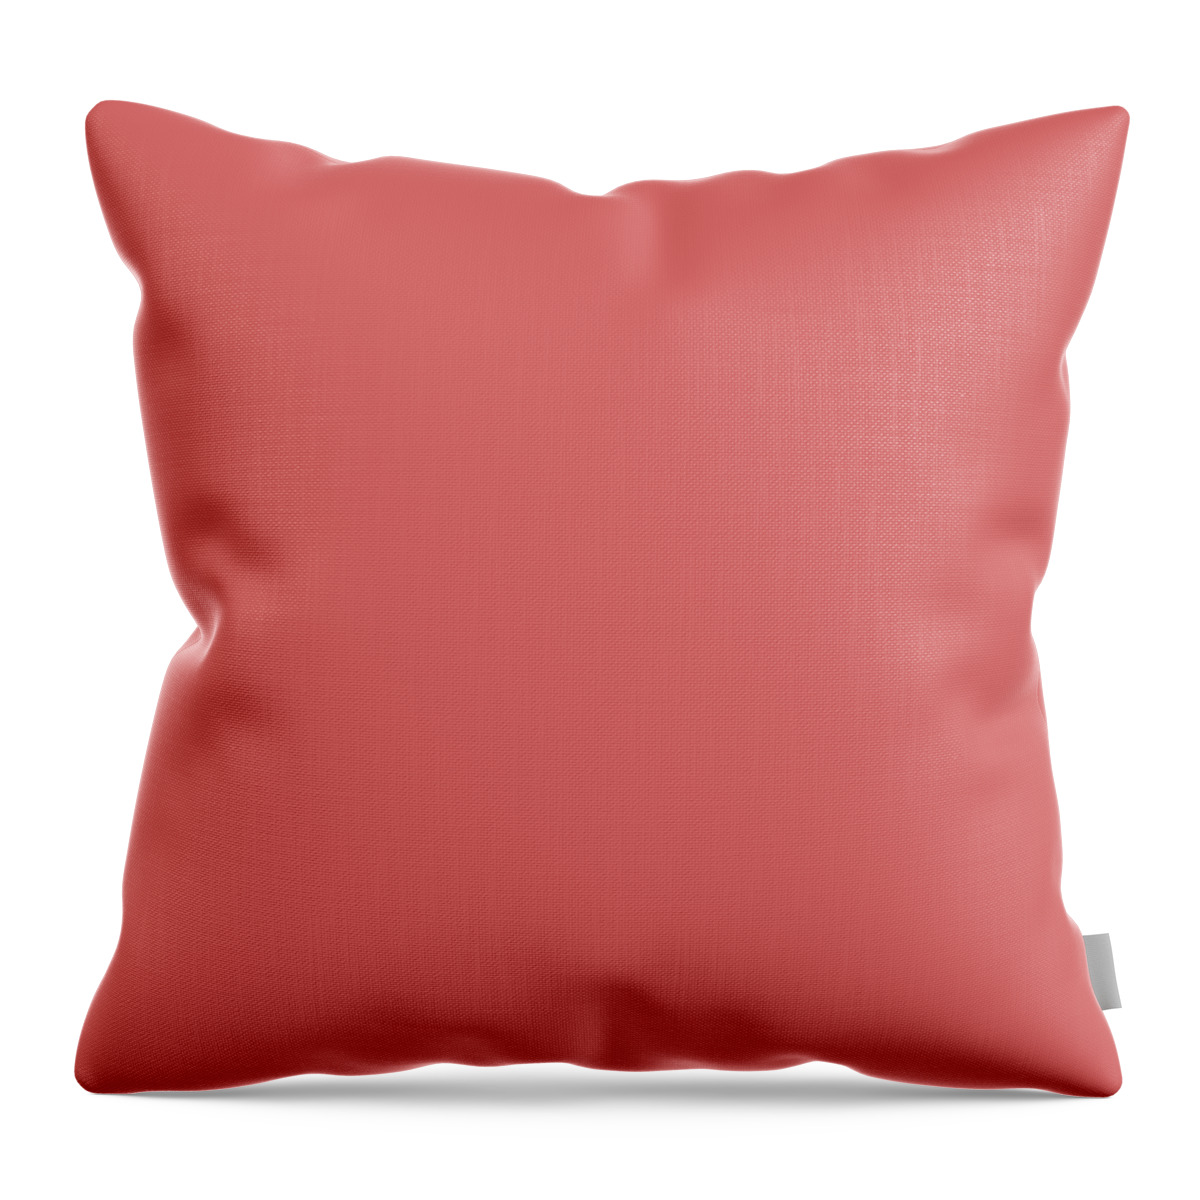 Geranium Red Throw Pillow featuring the digital art Geranium Red by TintoDesigns